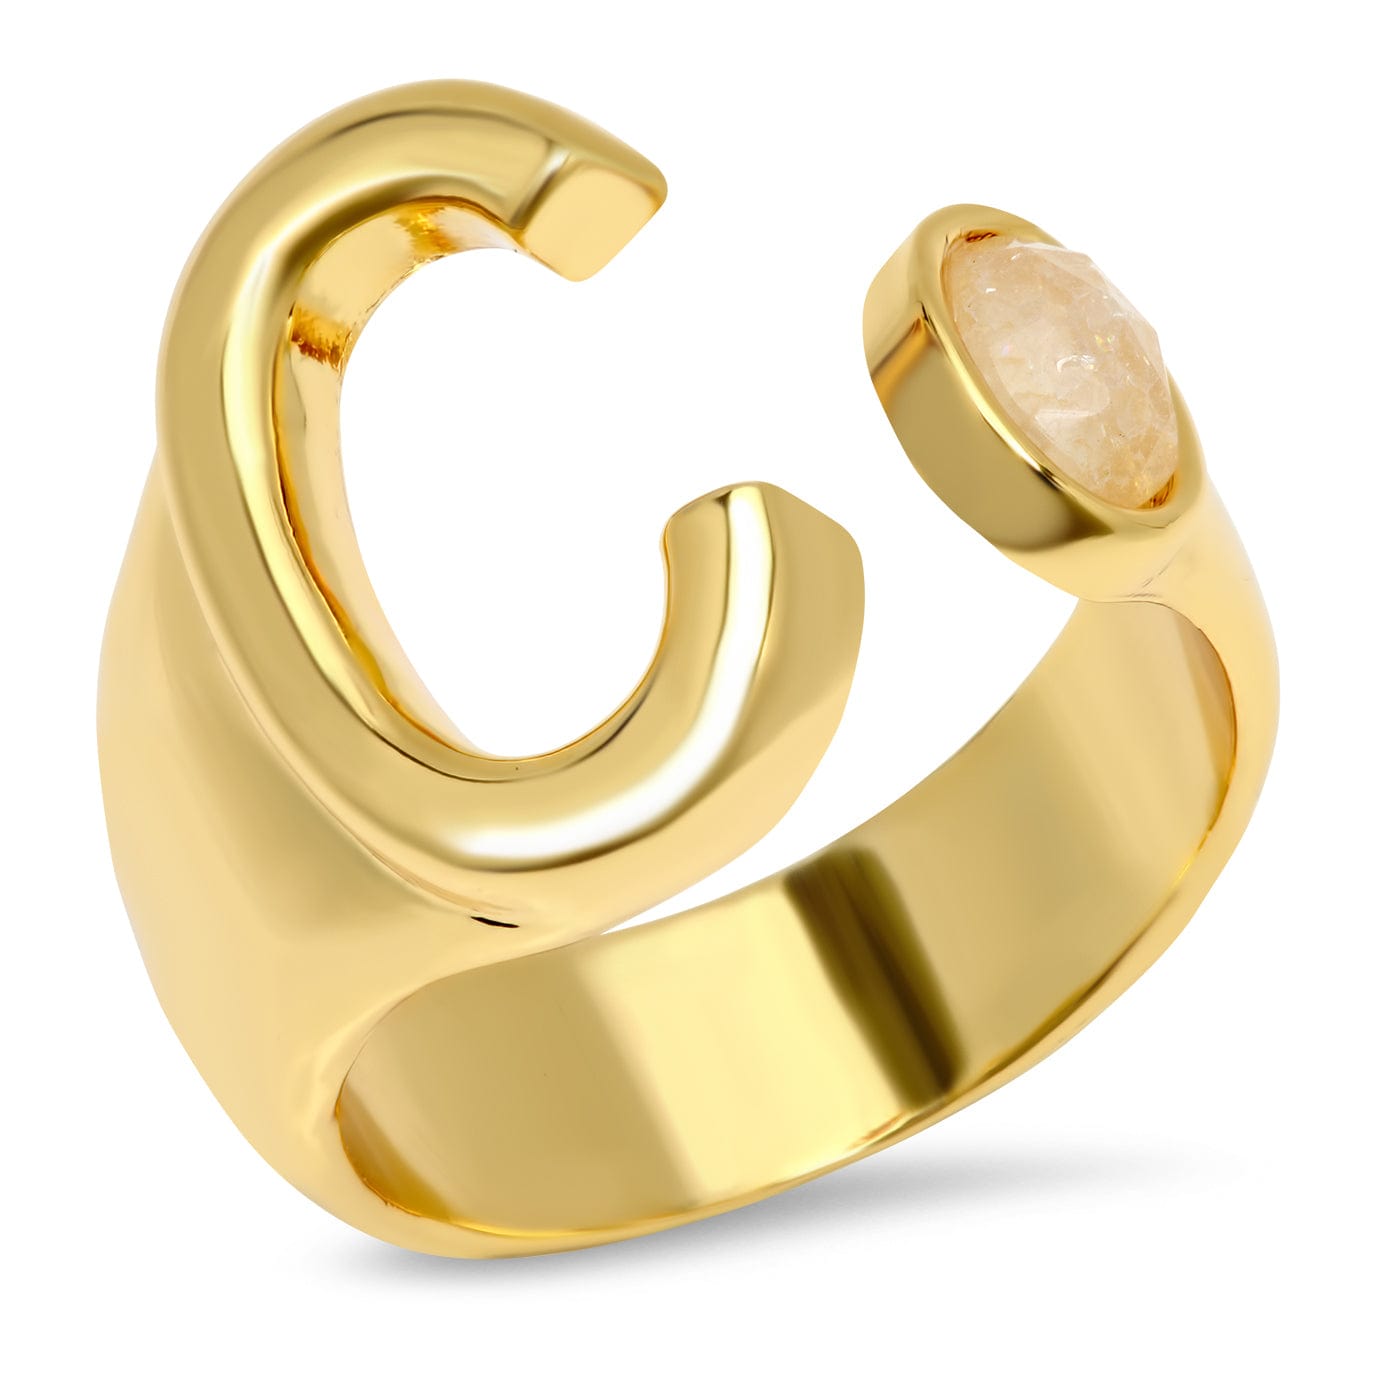 TAI JEWELRY Rings C Initial Wrap Ring